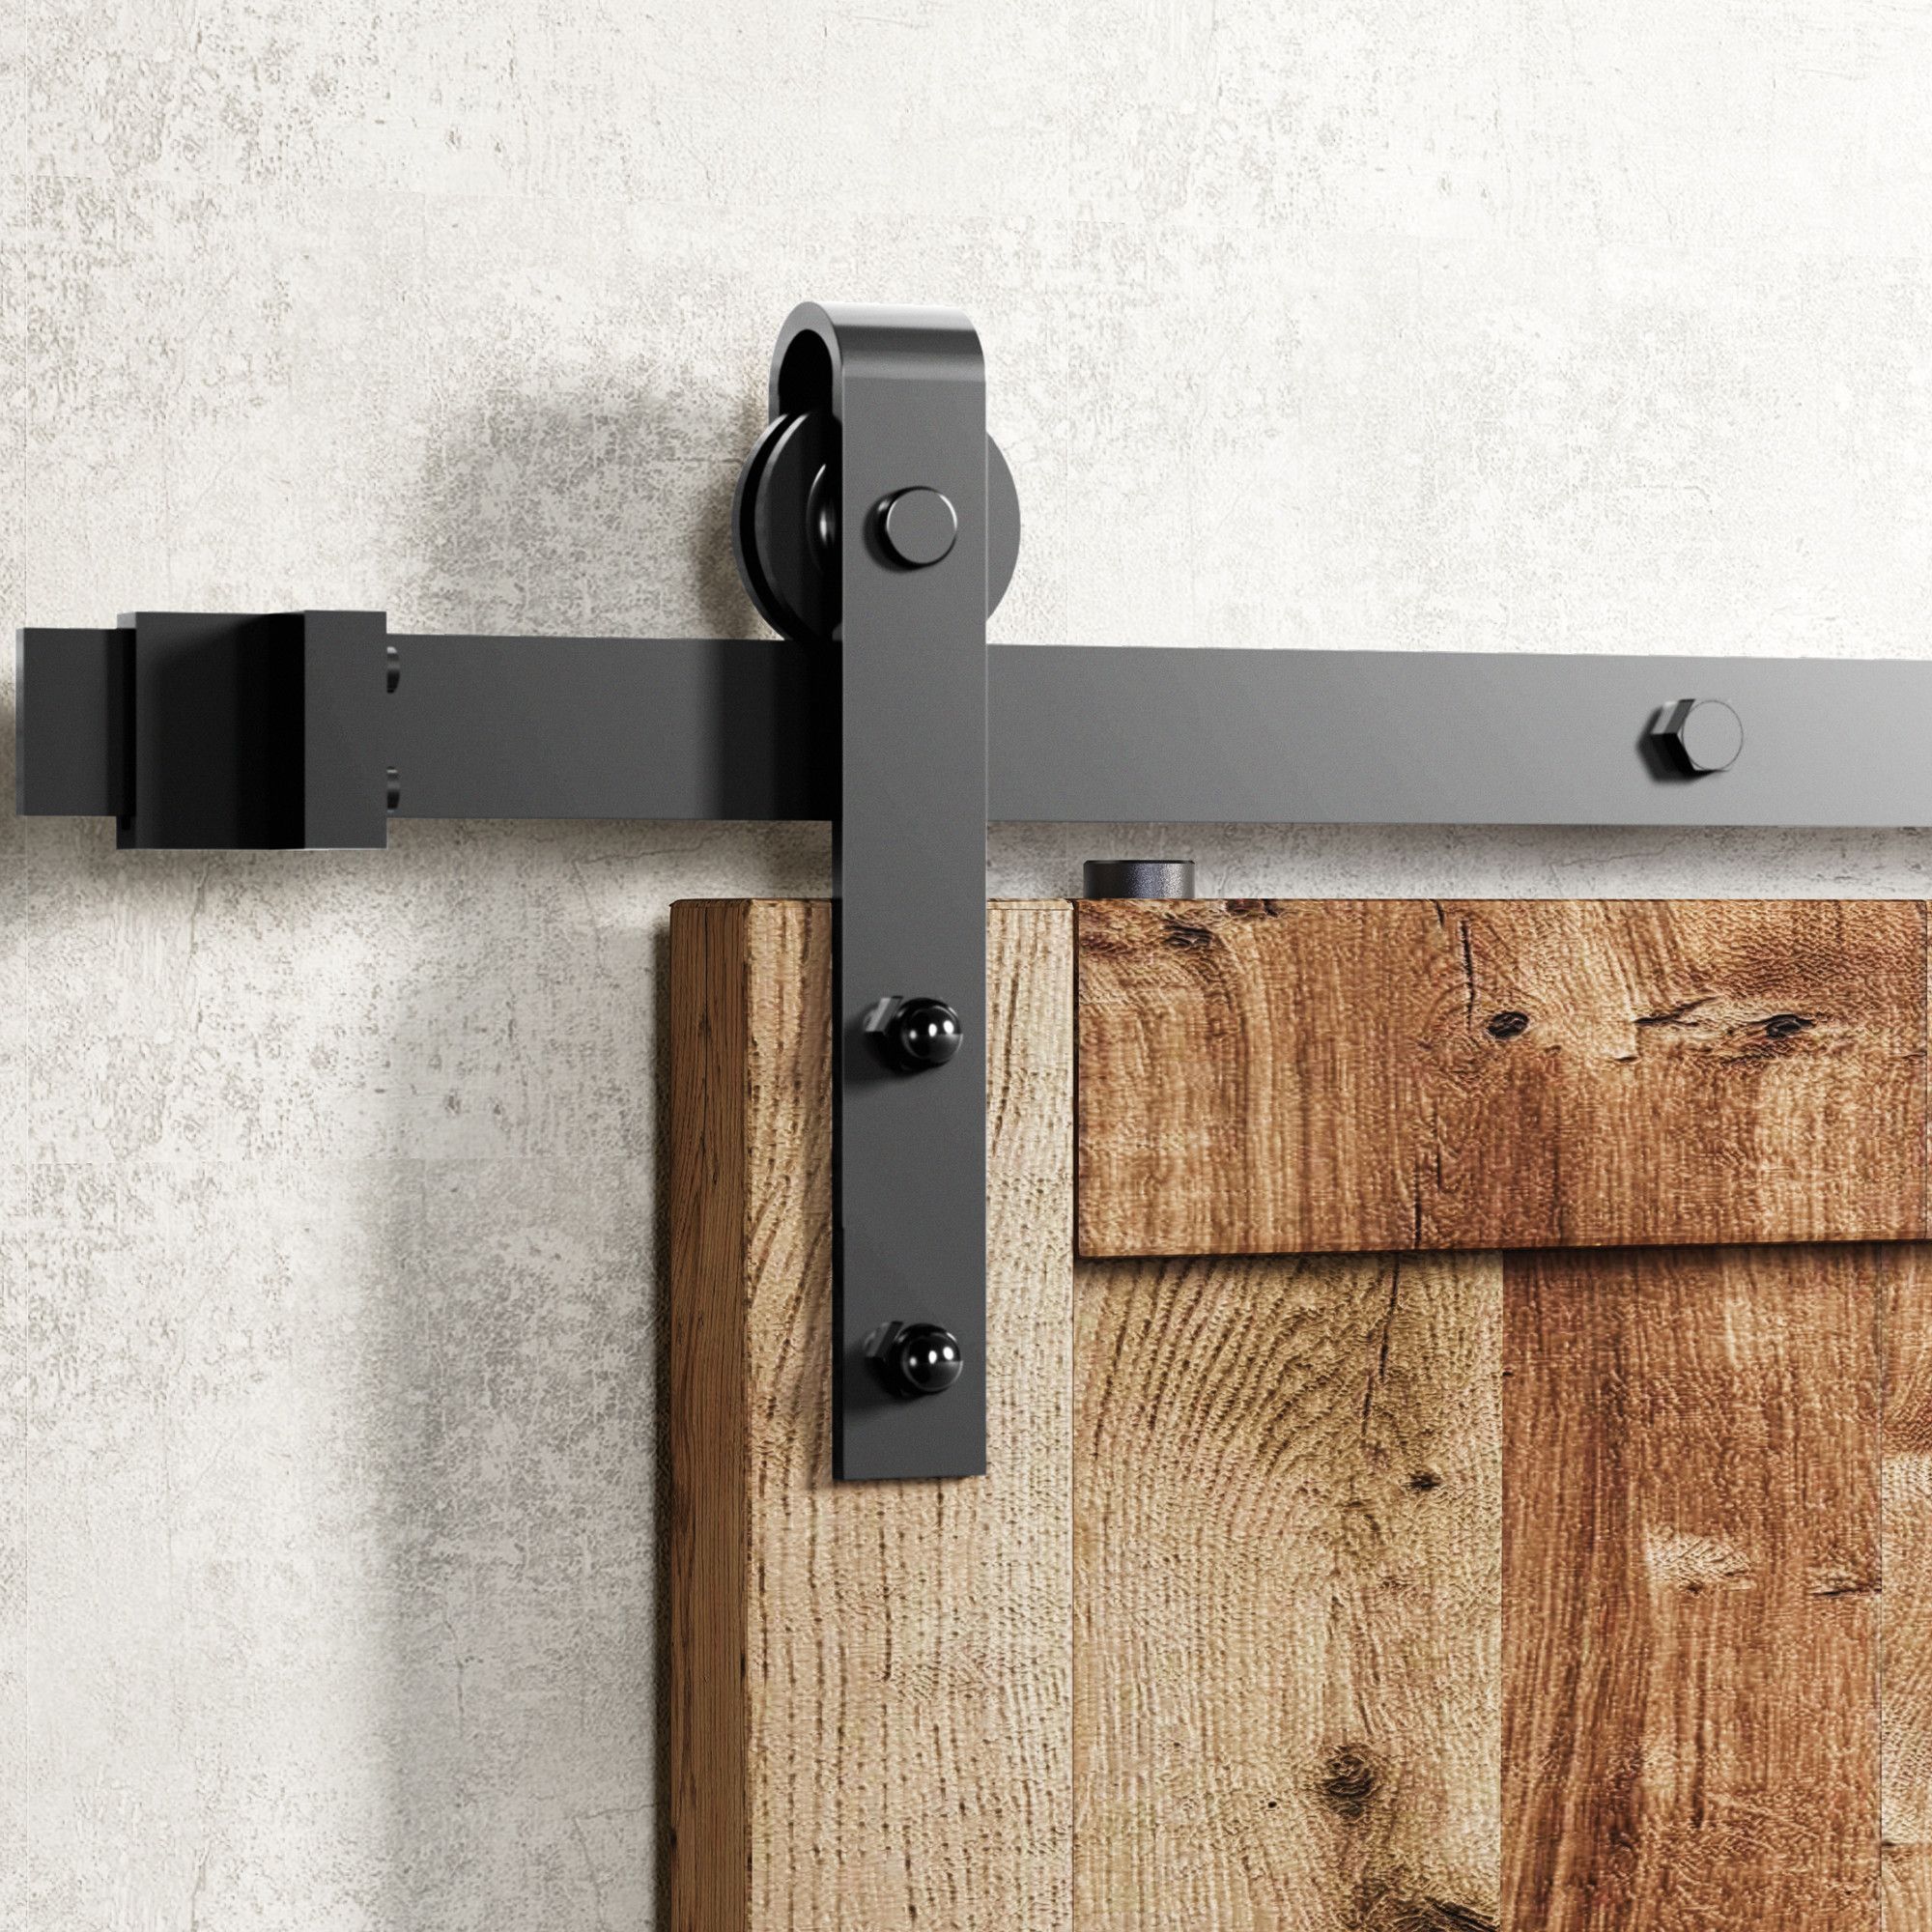 Homacer Black Rustic Non-Bypass Sliding Barn Door Hardware Kit, for Two/Double Doors - Classic Design Roller